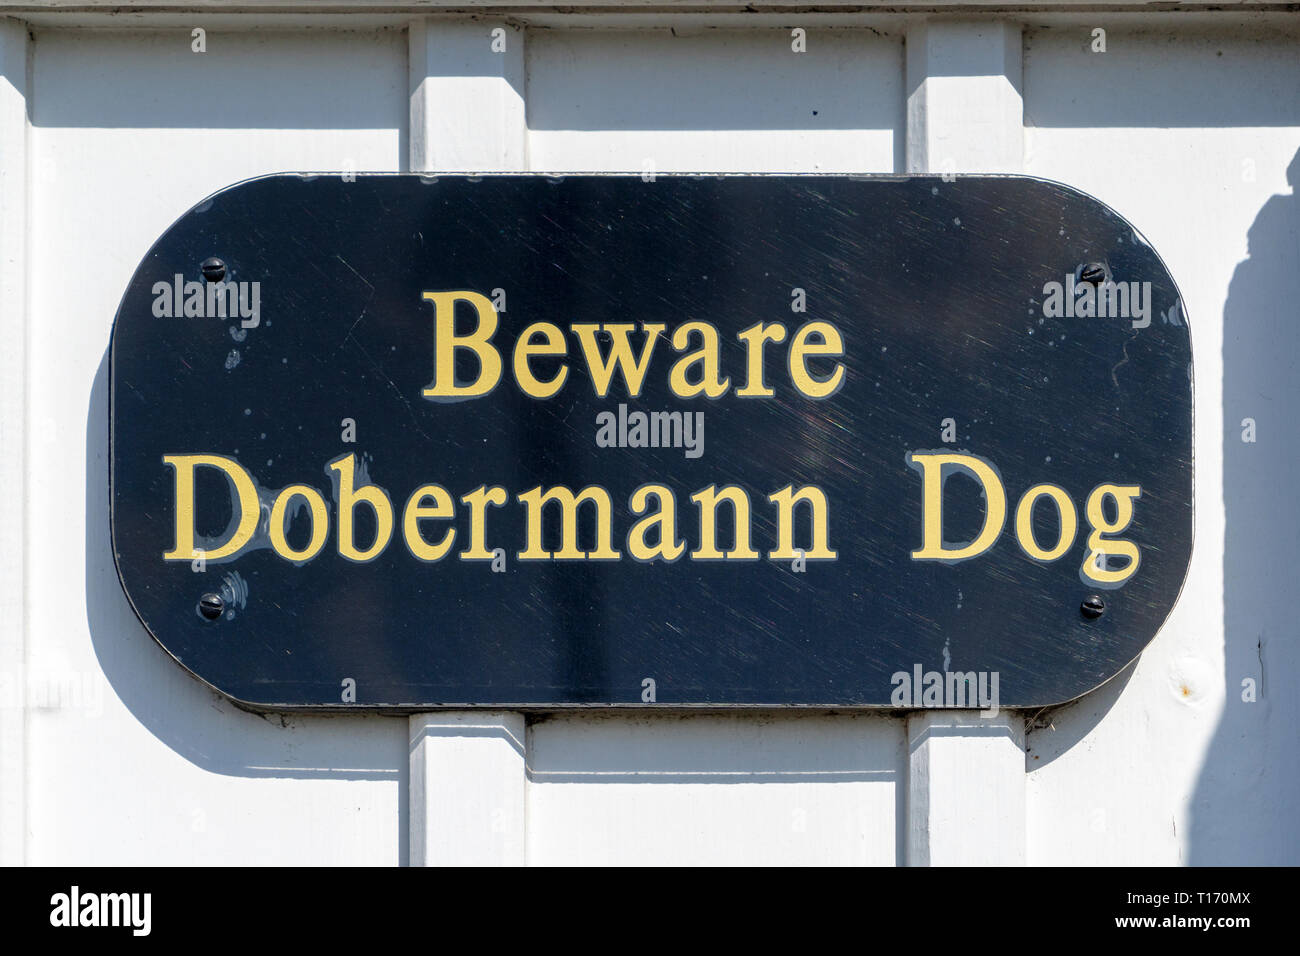 Beware Doberman dog sign Stock Photo